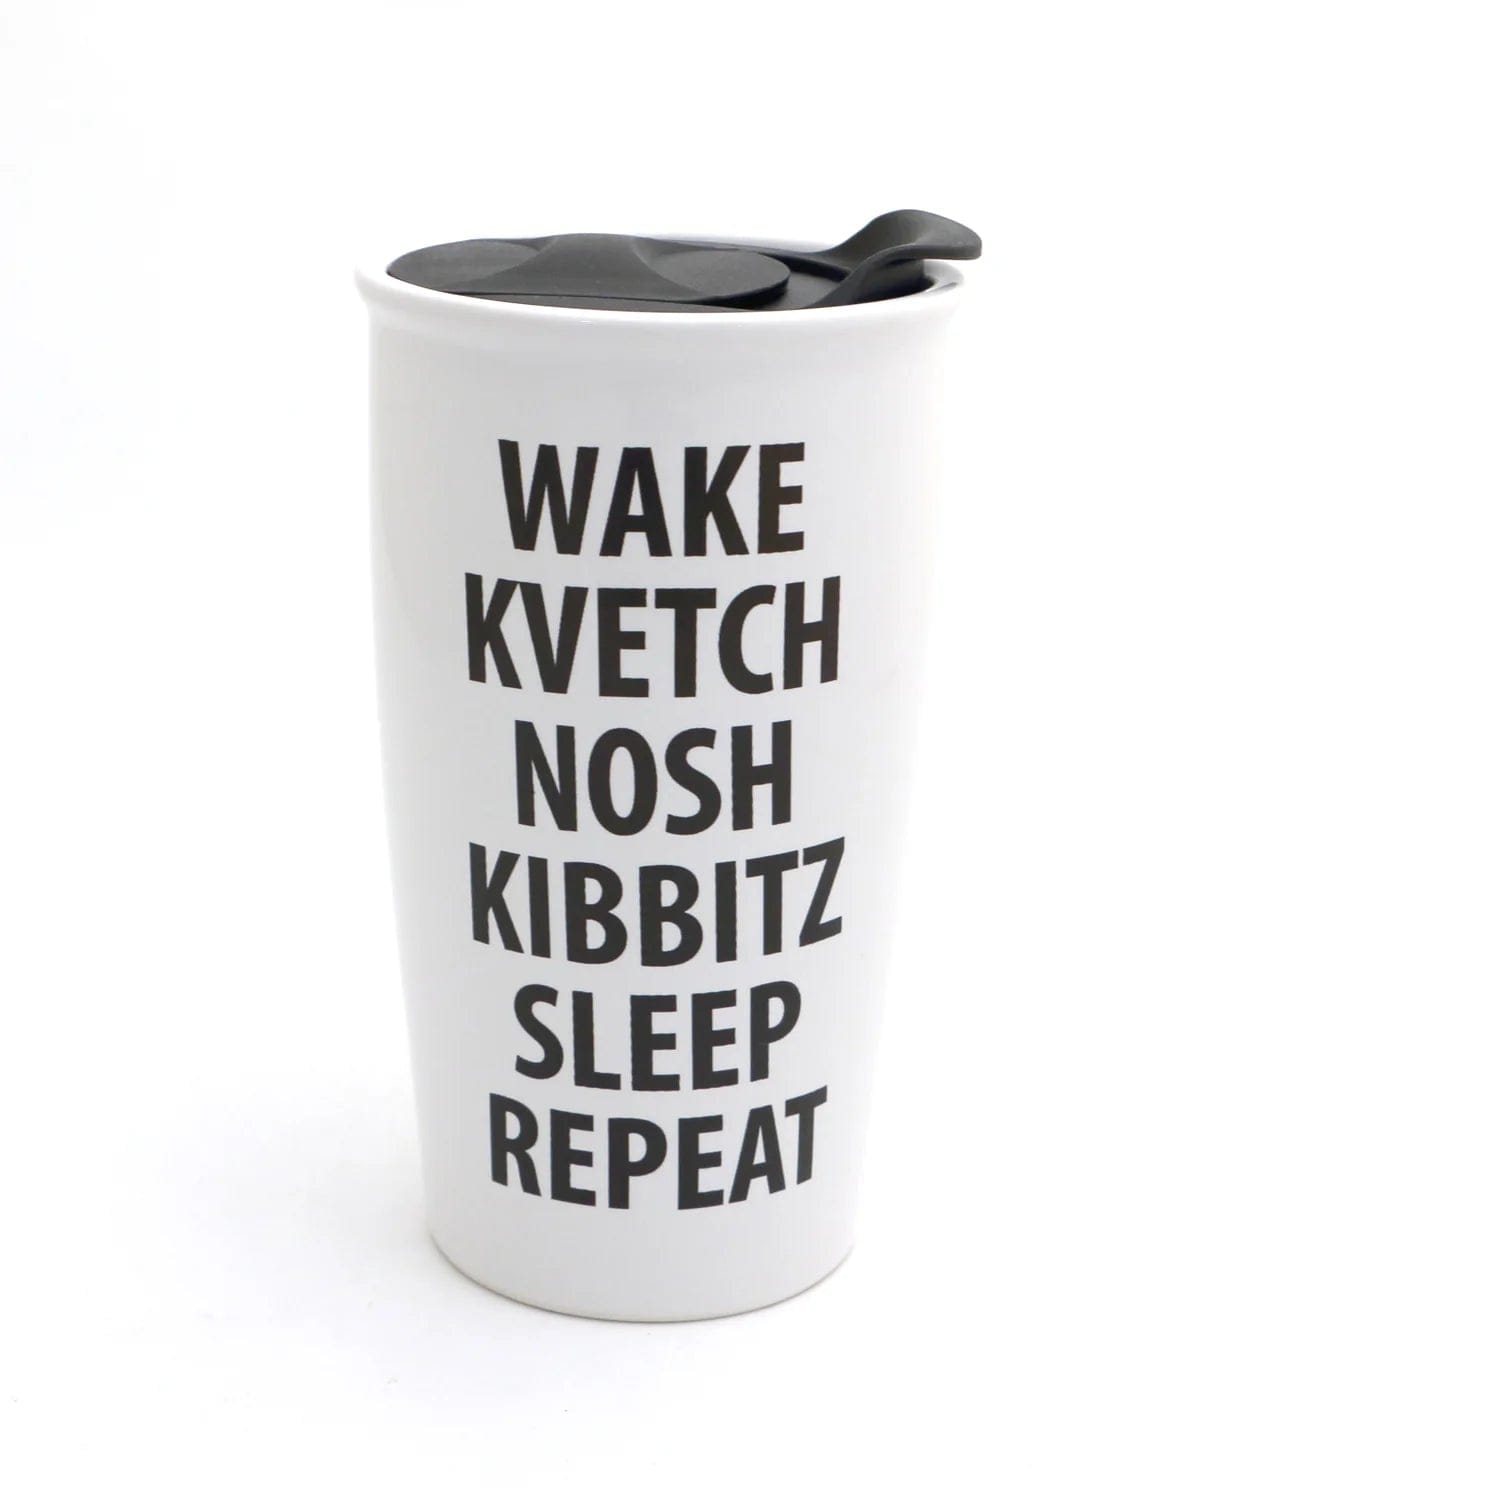 Good mythical morning travel mug - Good morning mugs - Porcelain Travel  mugs Funny Coffee Mug, Best Office Travel Tea Mug & Coffee Cup Gifts 14 oz